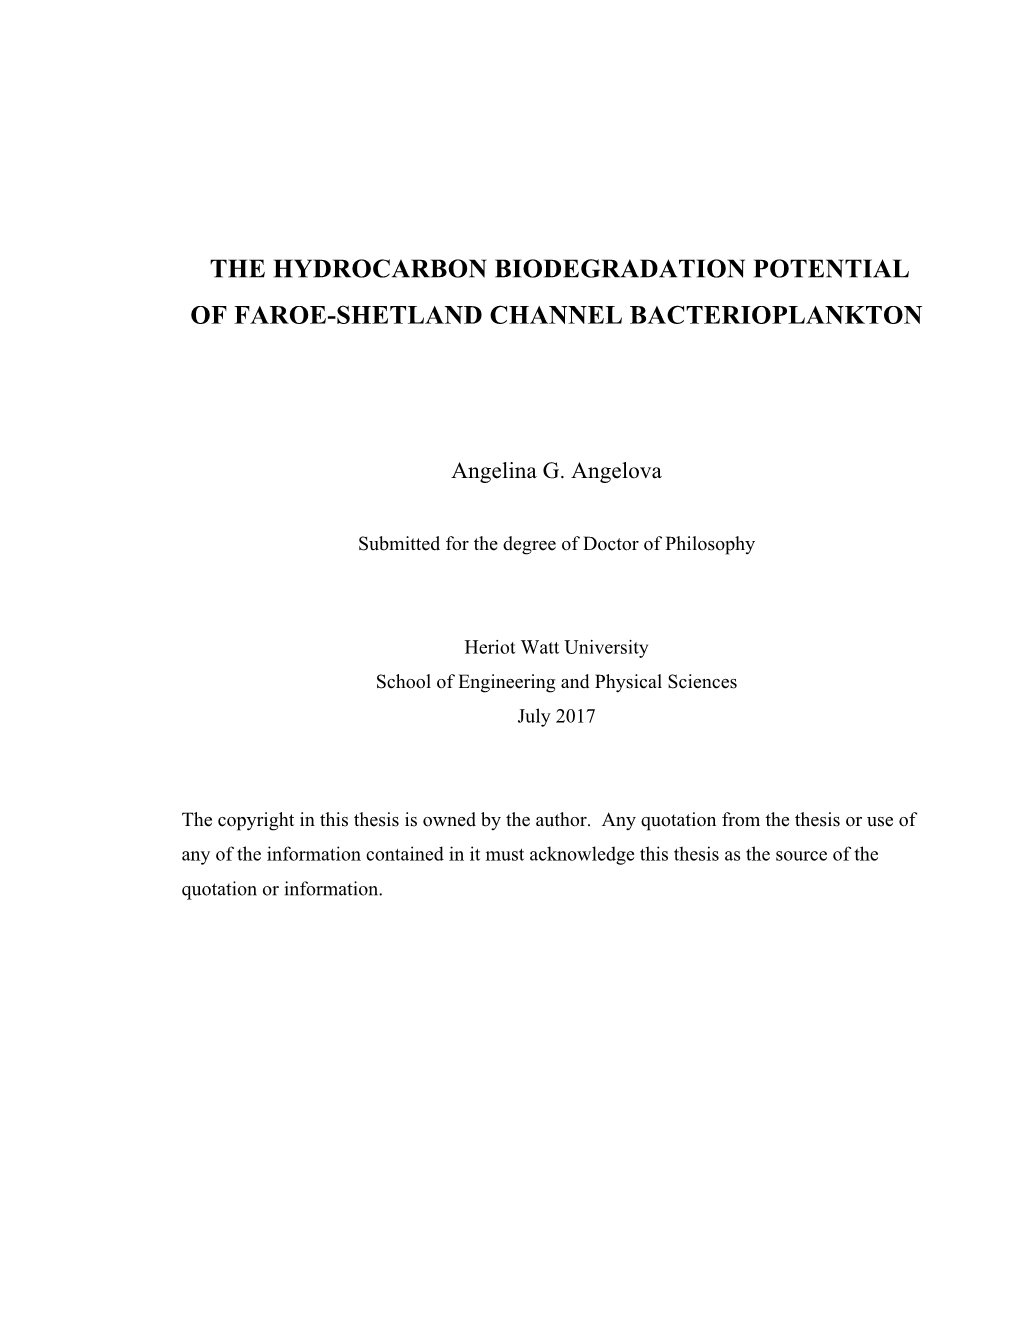 The Hydrocarbon Biodegradation Potential of Faroe-Shetland Channel Bacterioplankton